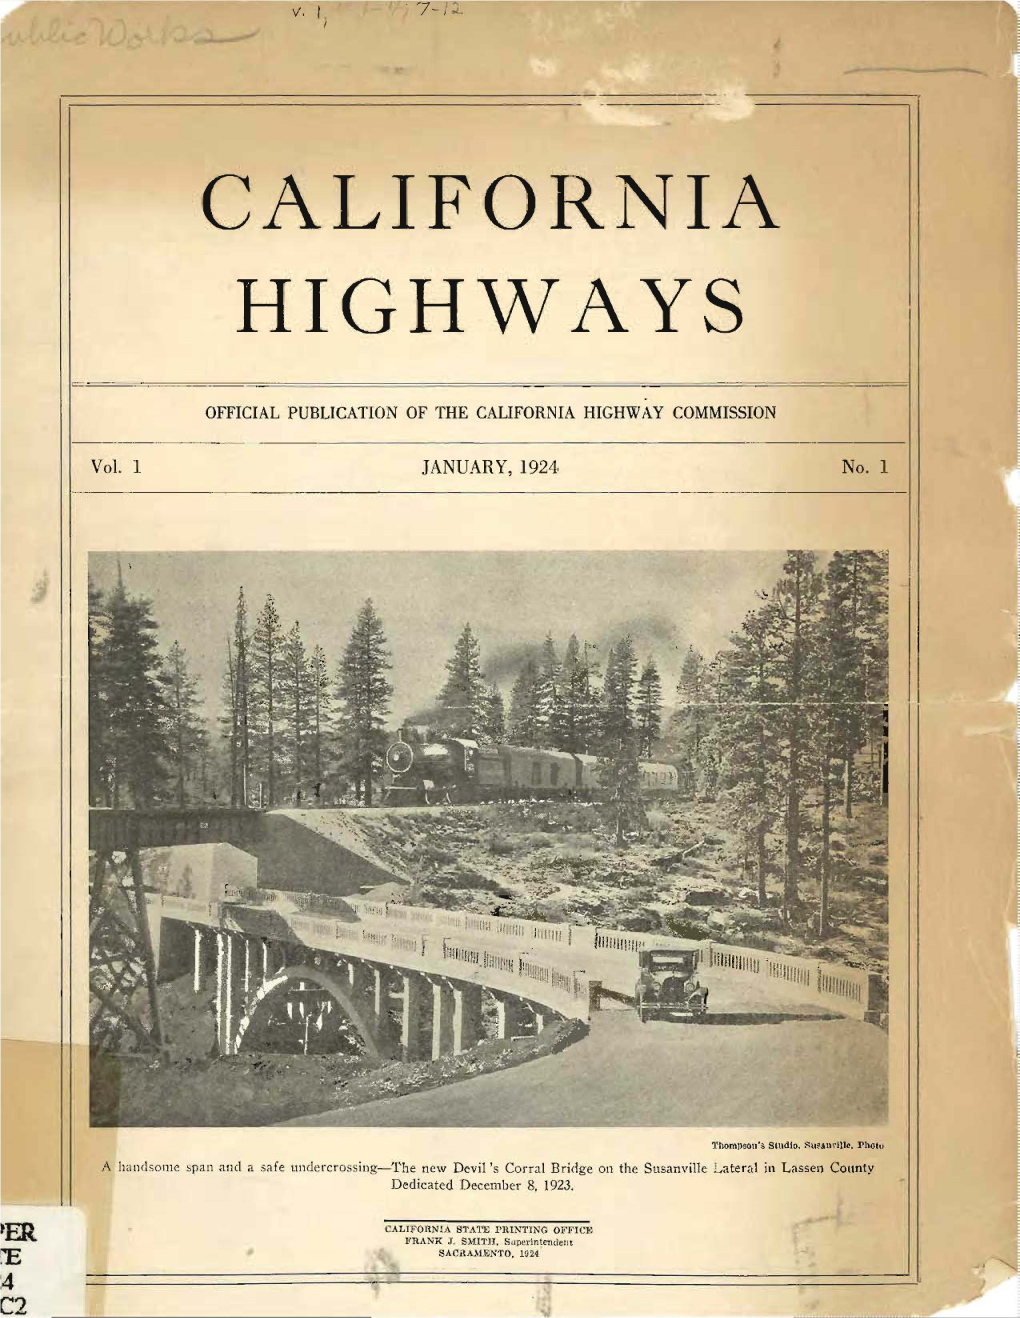 California Highways 1:1 January, 1924